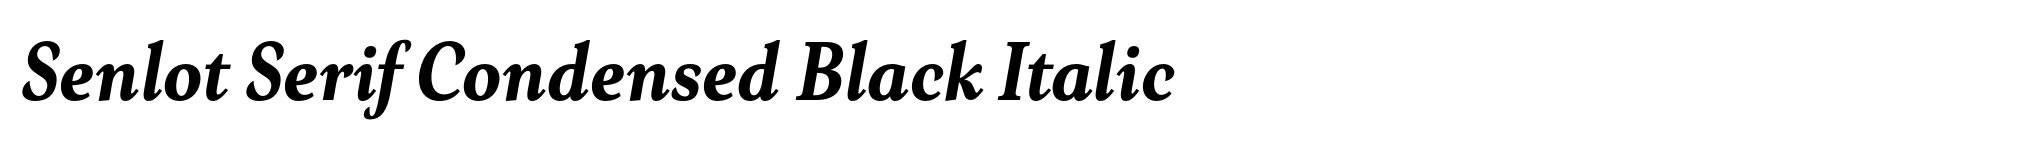 Senlot Serif Condensed Black Italic image